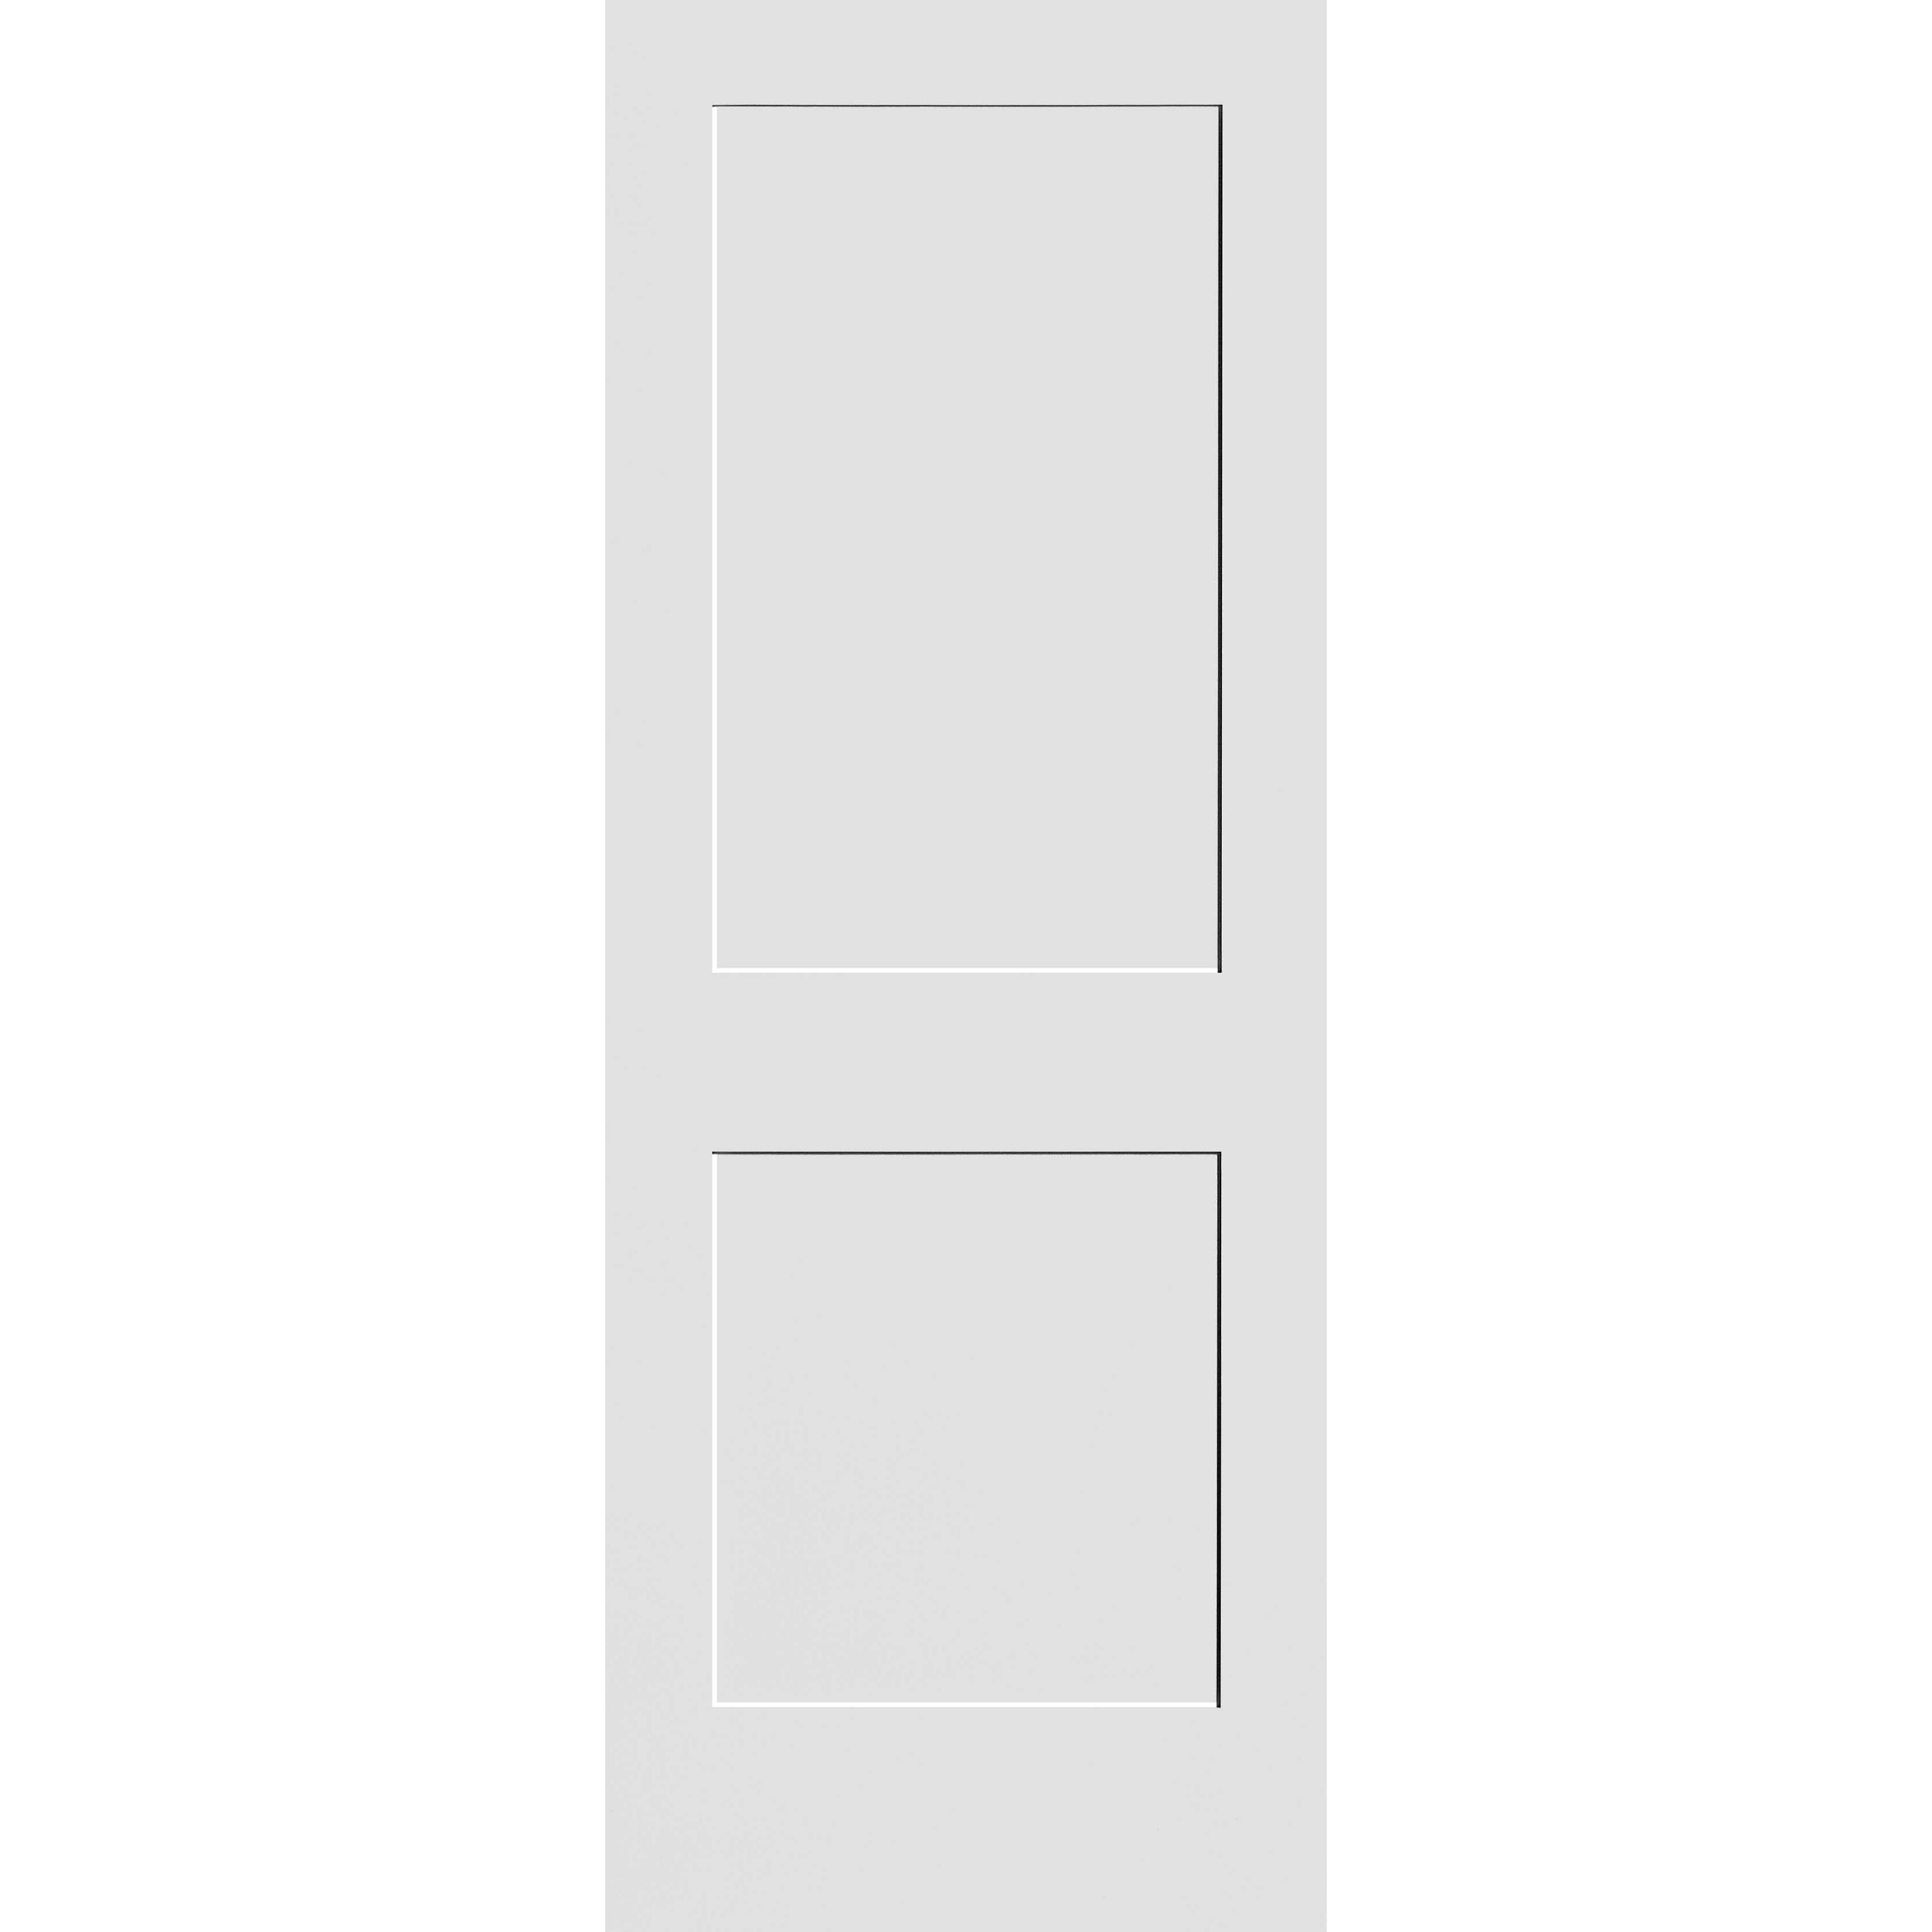 32X84 #8402 MDF PRIMED SHAKER PANEL INTERIOR DOOR 1-3/4 THICKNESS